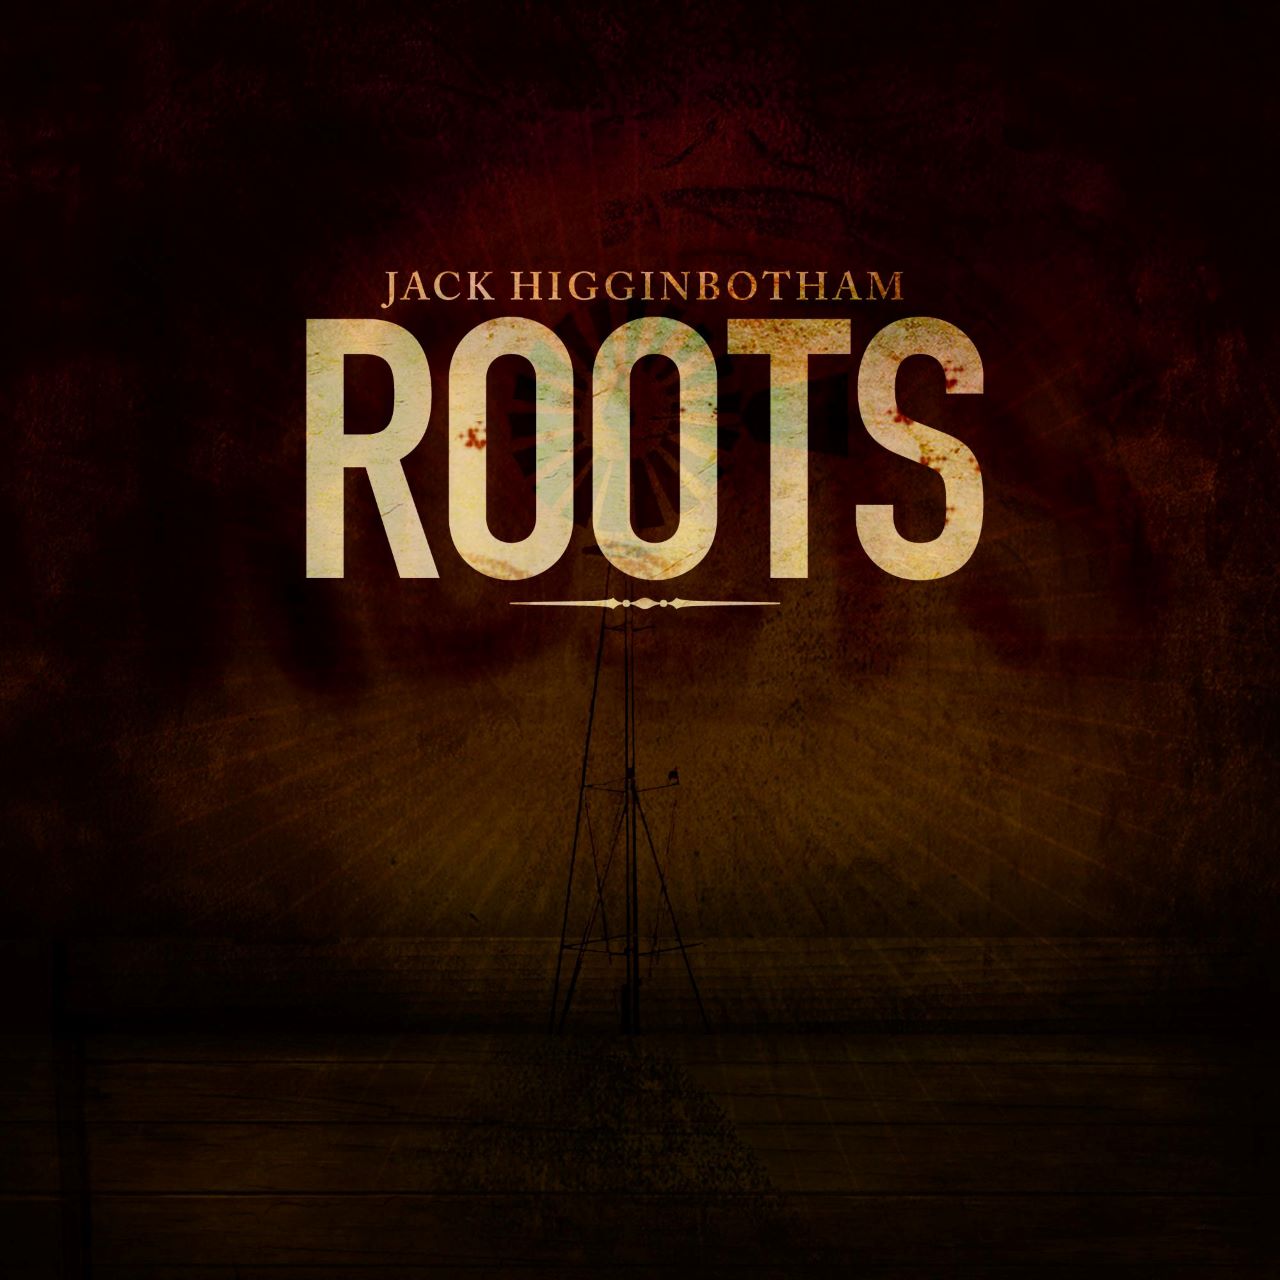 Jack Higginbotham - Roots cover album